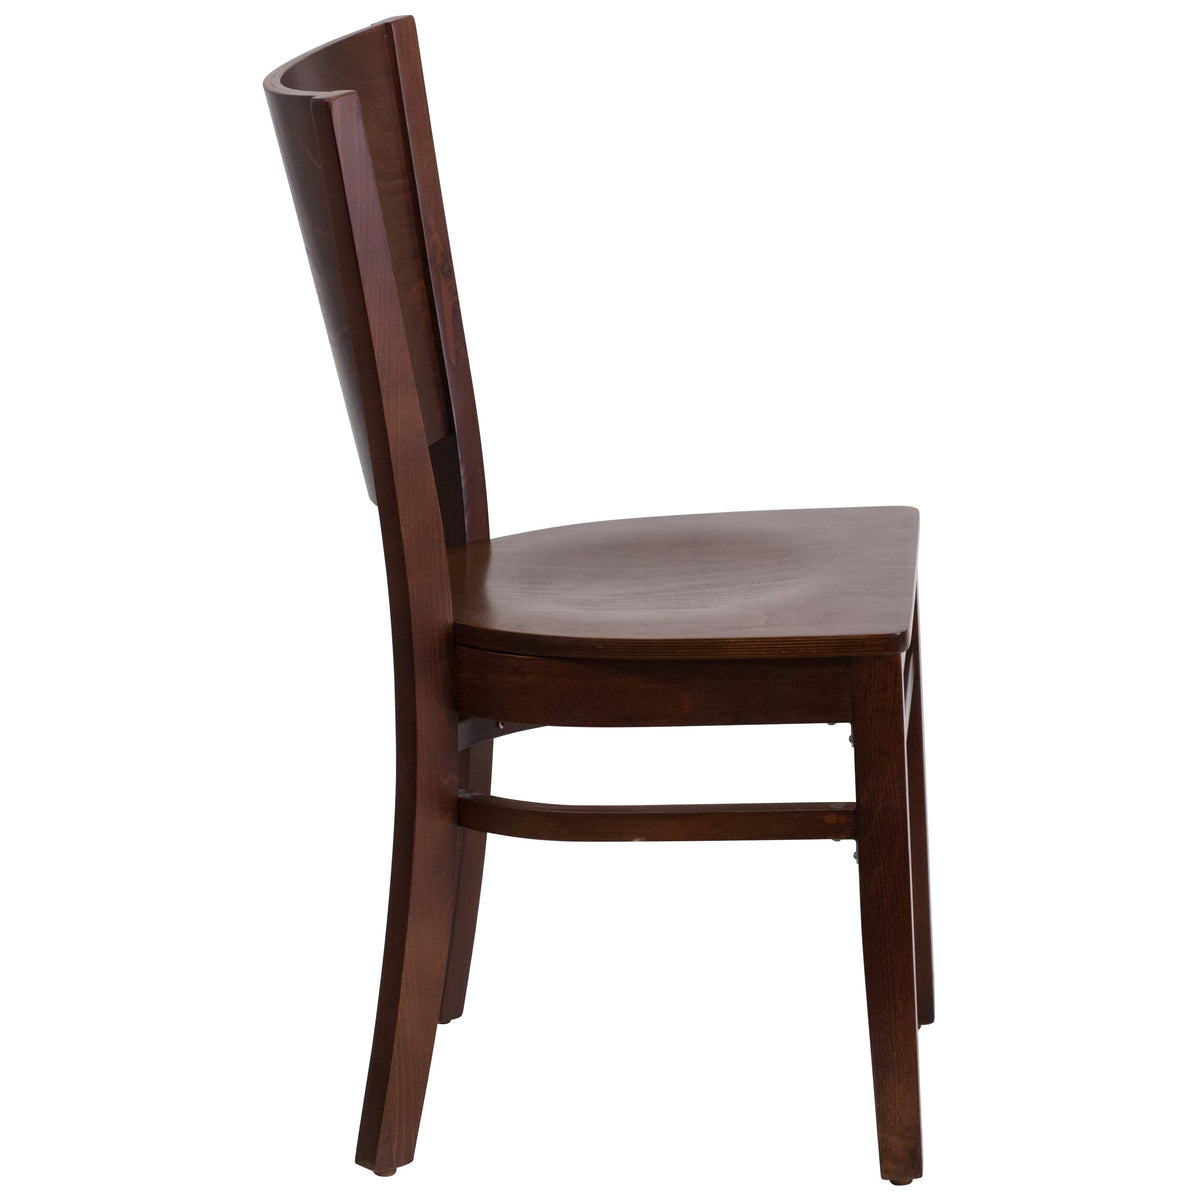 Walnut Wood Seat/Walnut Wood Frame |#| Solid Back Walnut Wood Restaurant Chair - Hospitality Seating